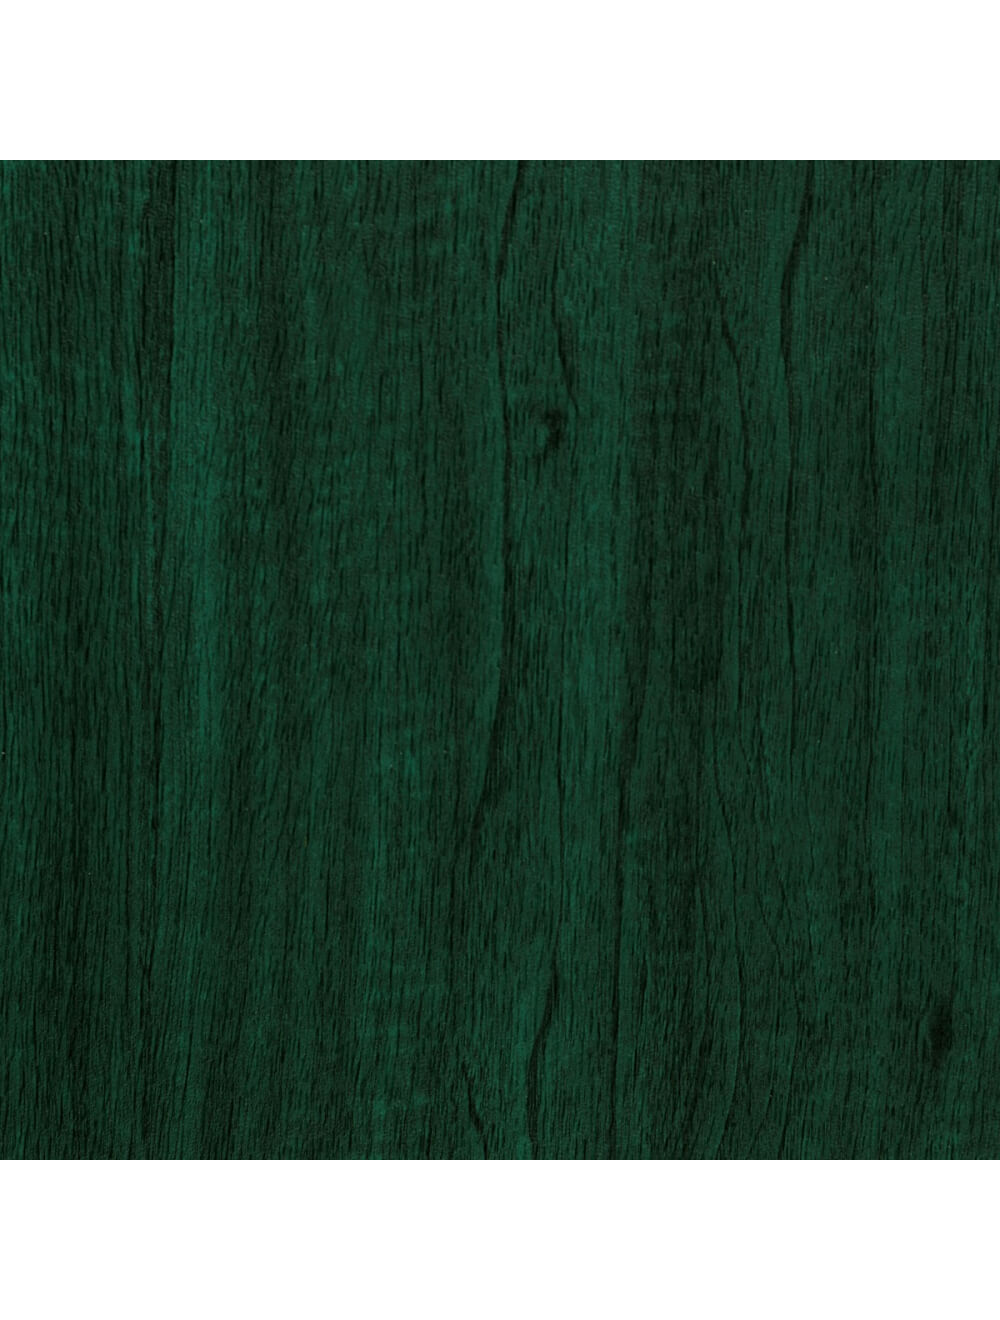 Washington Green Wood Grain Material Swatch (E958)